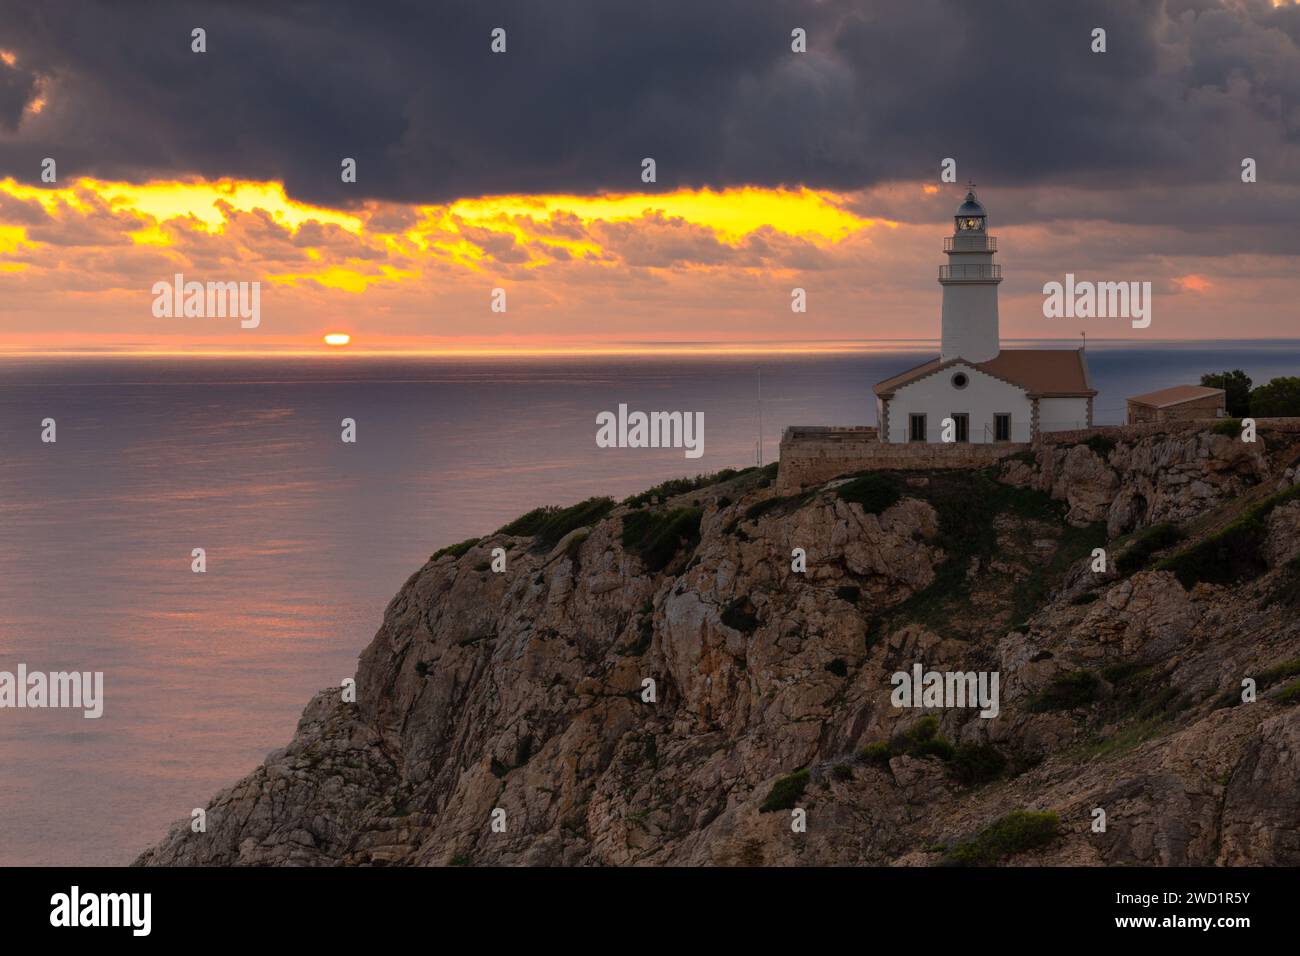 Sunrise at Capdepera lighthouse near Cala Rajada, island of Mallorca, Spain Stock Photo